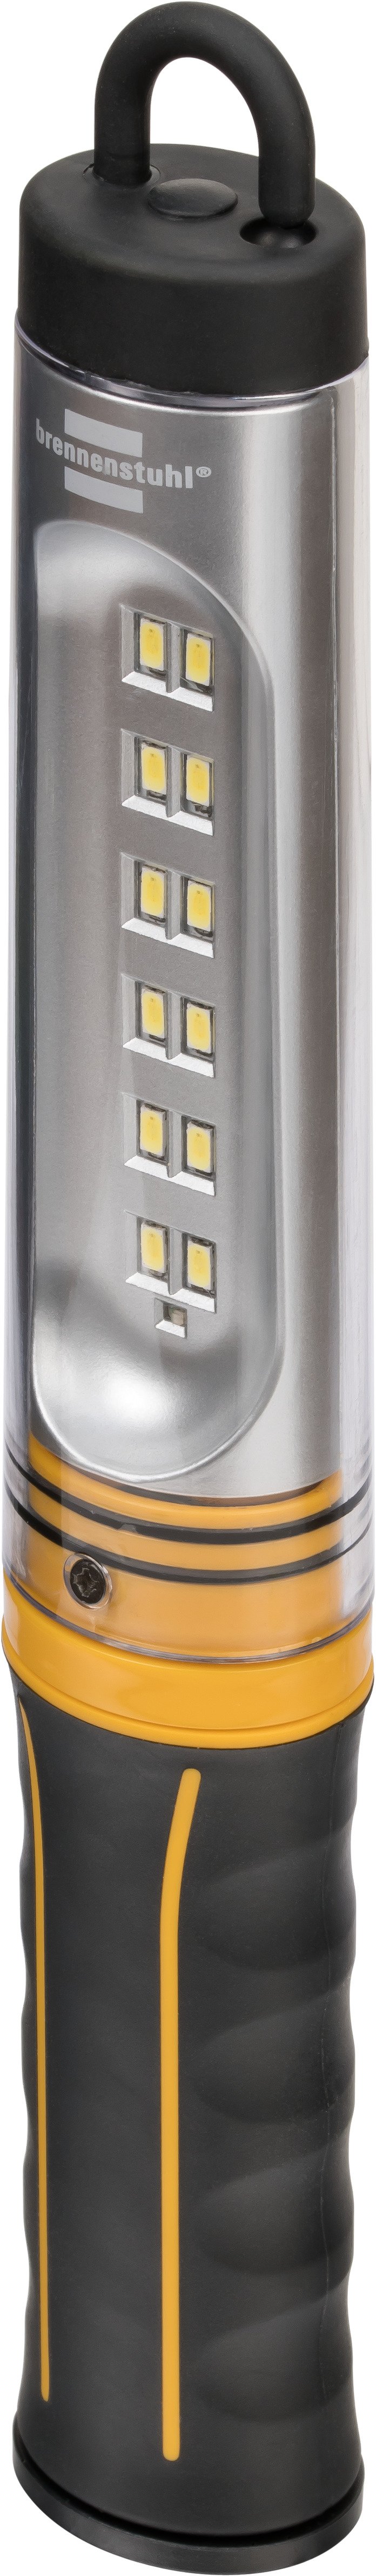 LED darbo lempa BRENNENSTUHL, IP54, 520lm, įkraunama USB, juodos spalvos